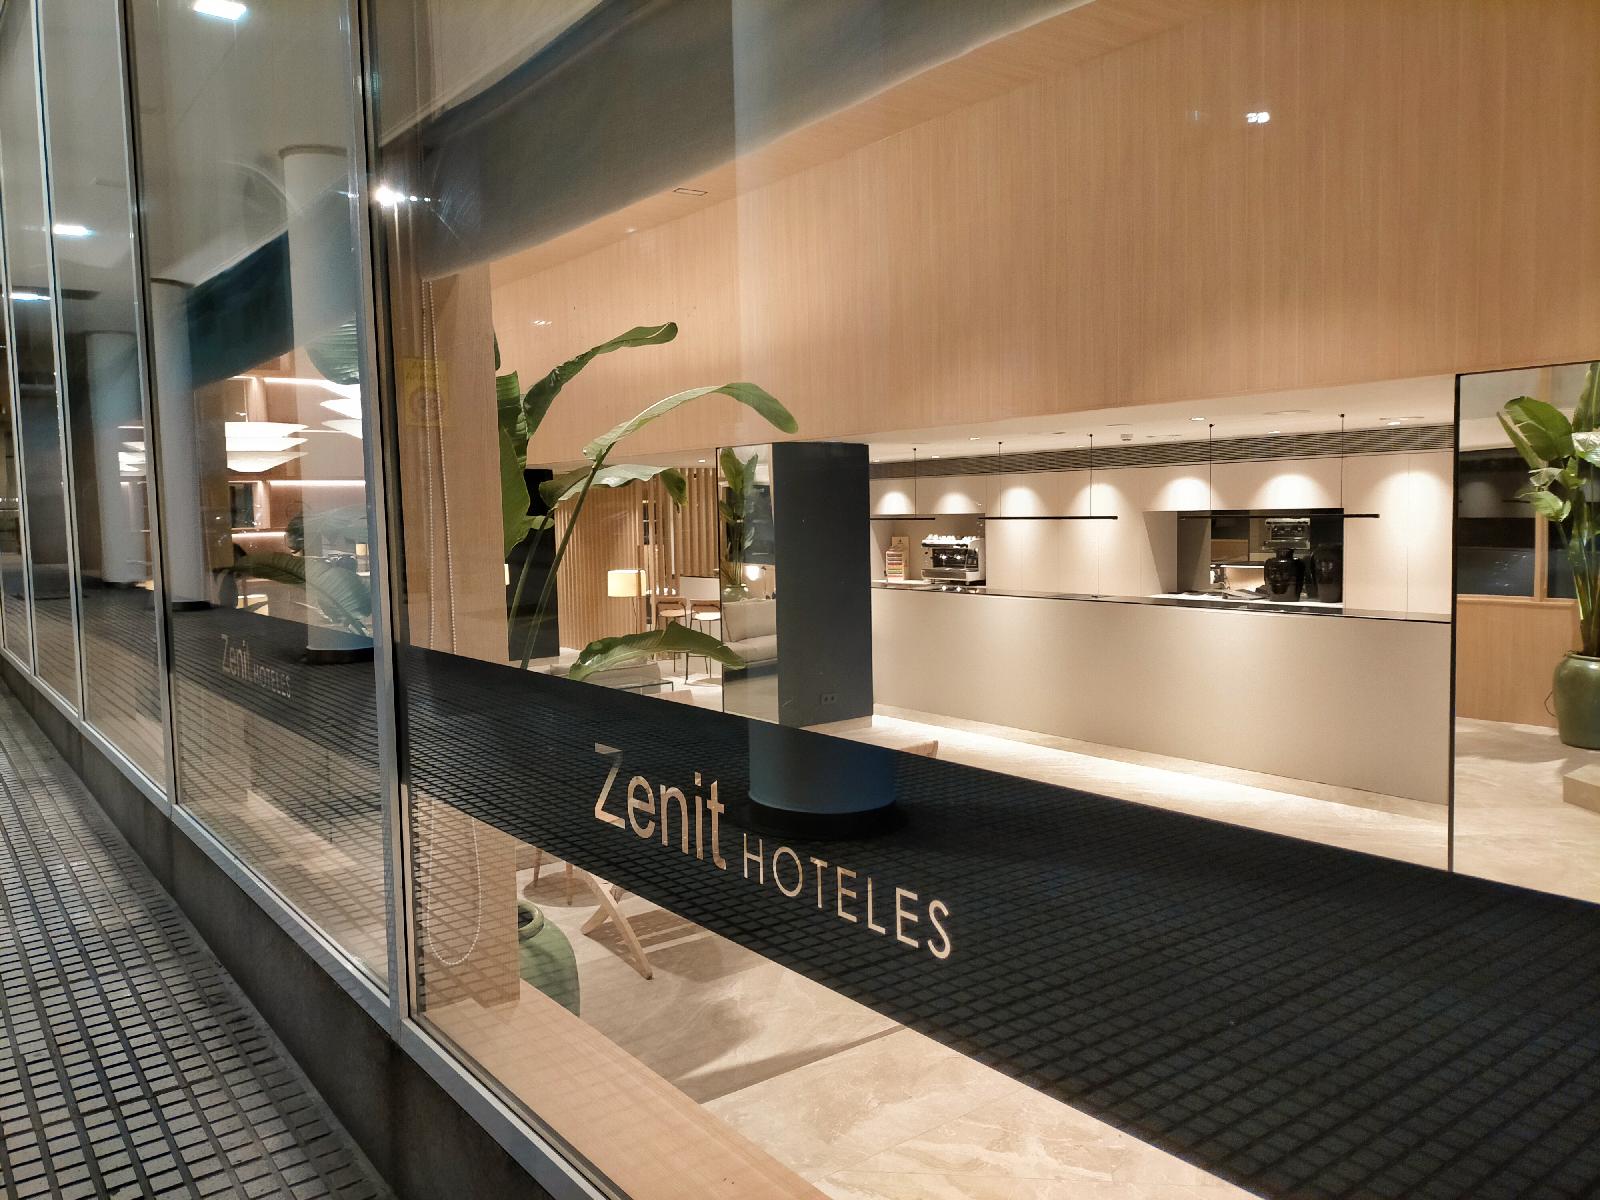 3. Hotel Zenit Coruña